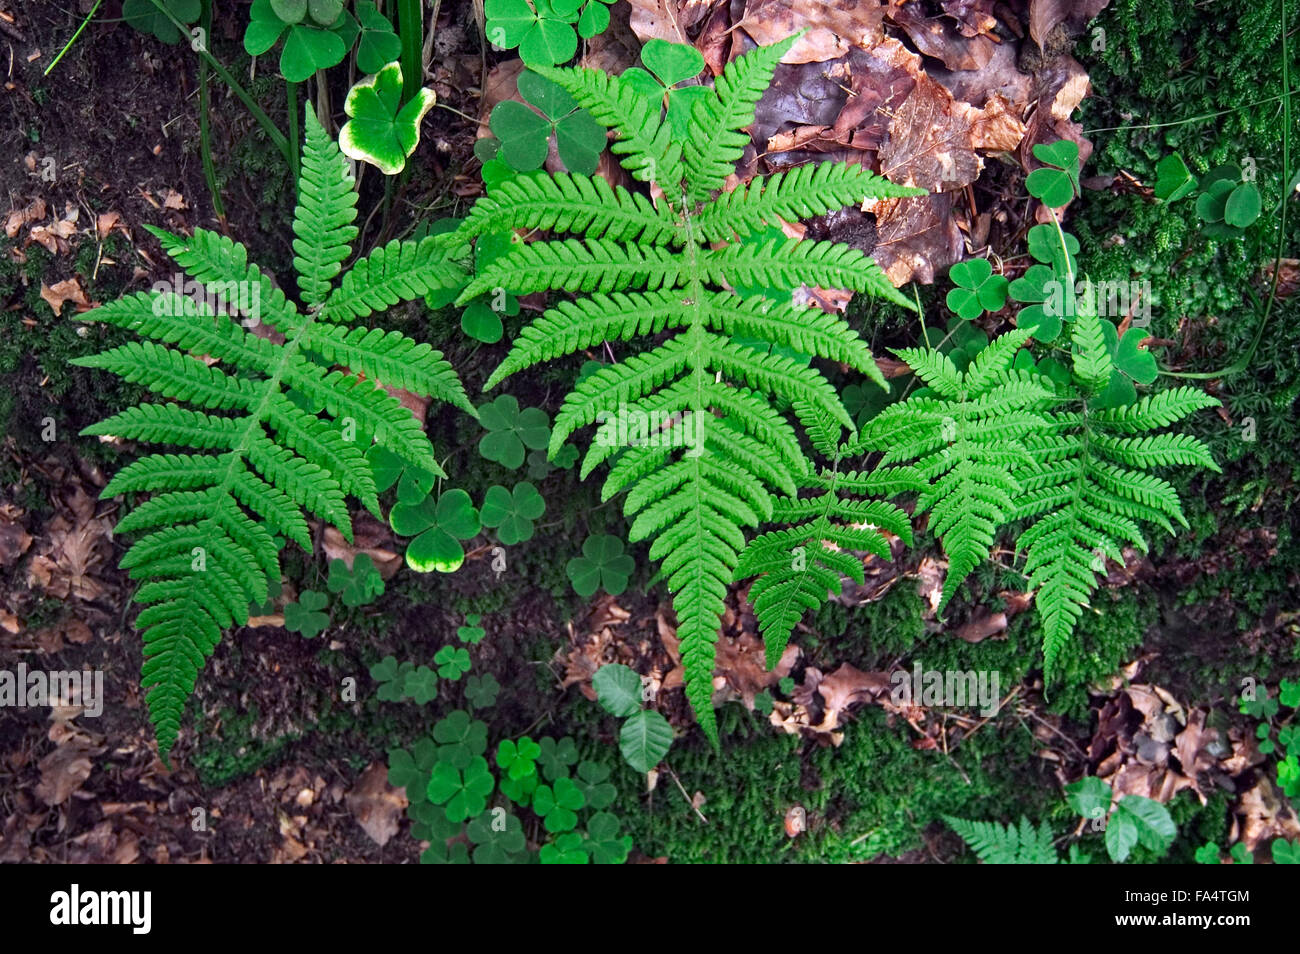 Long beechfern / long beech fern / Northern beech fern (Phegopteris connectilis / Dryopteris phegopteris) Stock Photo